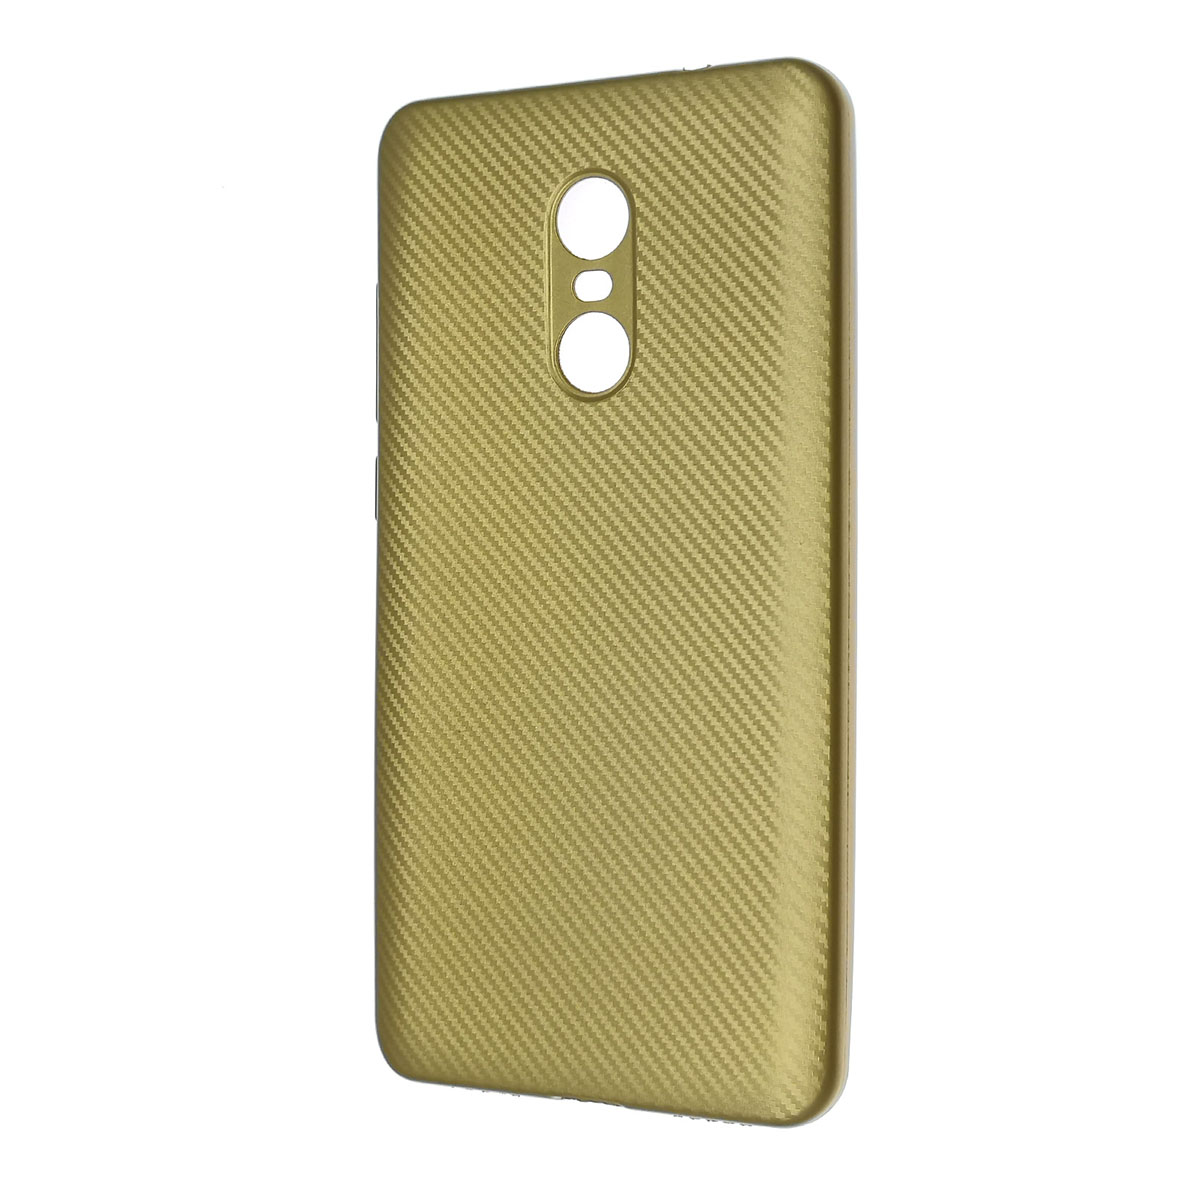 Чехол накладка для XIAOMI Redmi Note 4X, силикон, карбон, цвет золотистый.